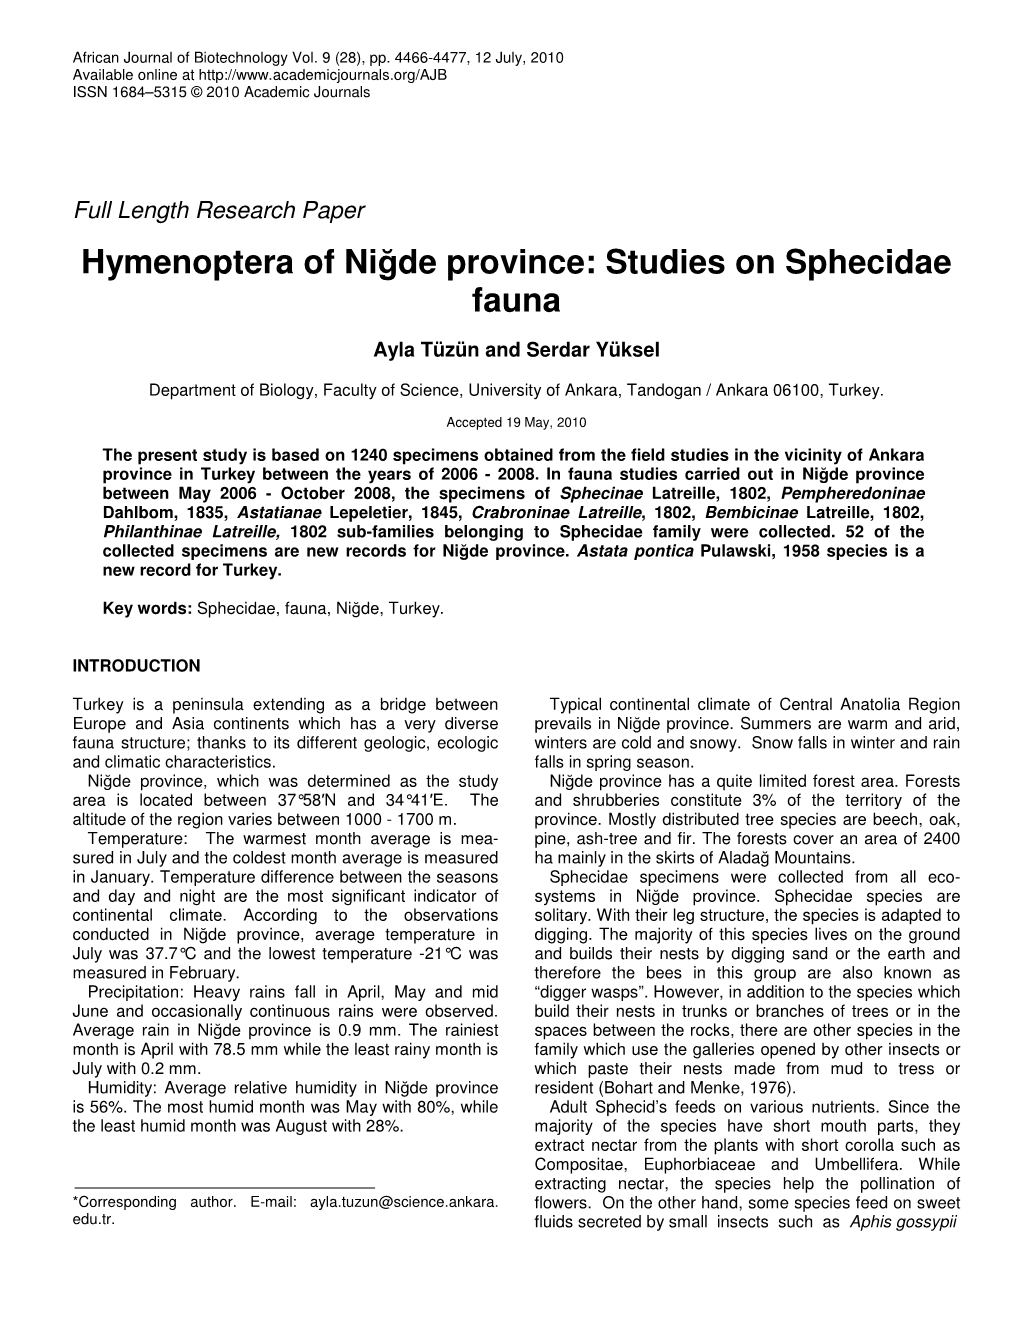 Hymenoptera of Niğde Province: Studies on Sphecidae Fauna